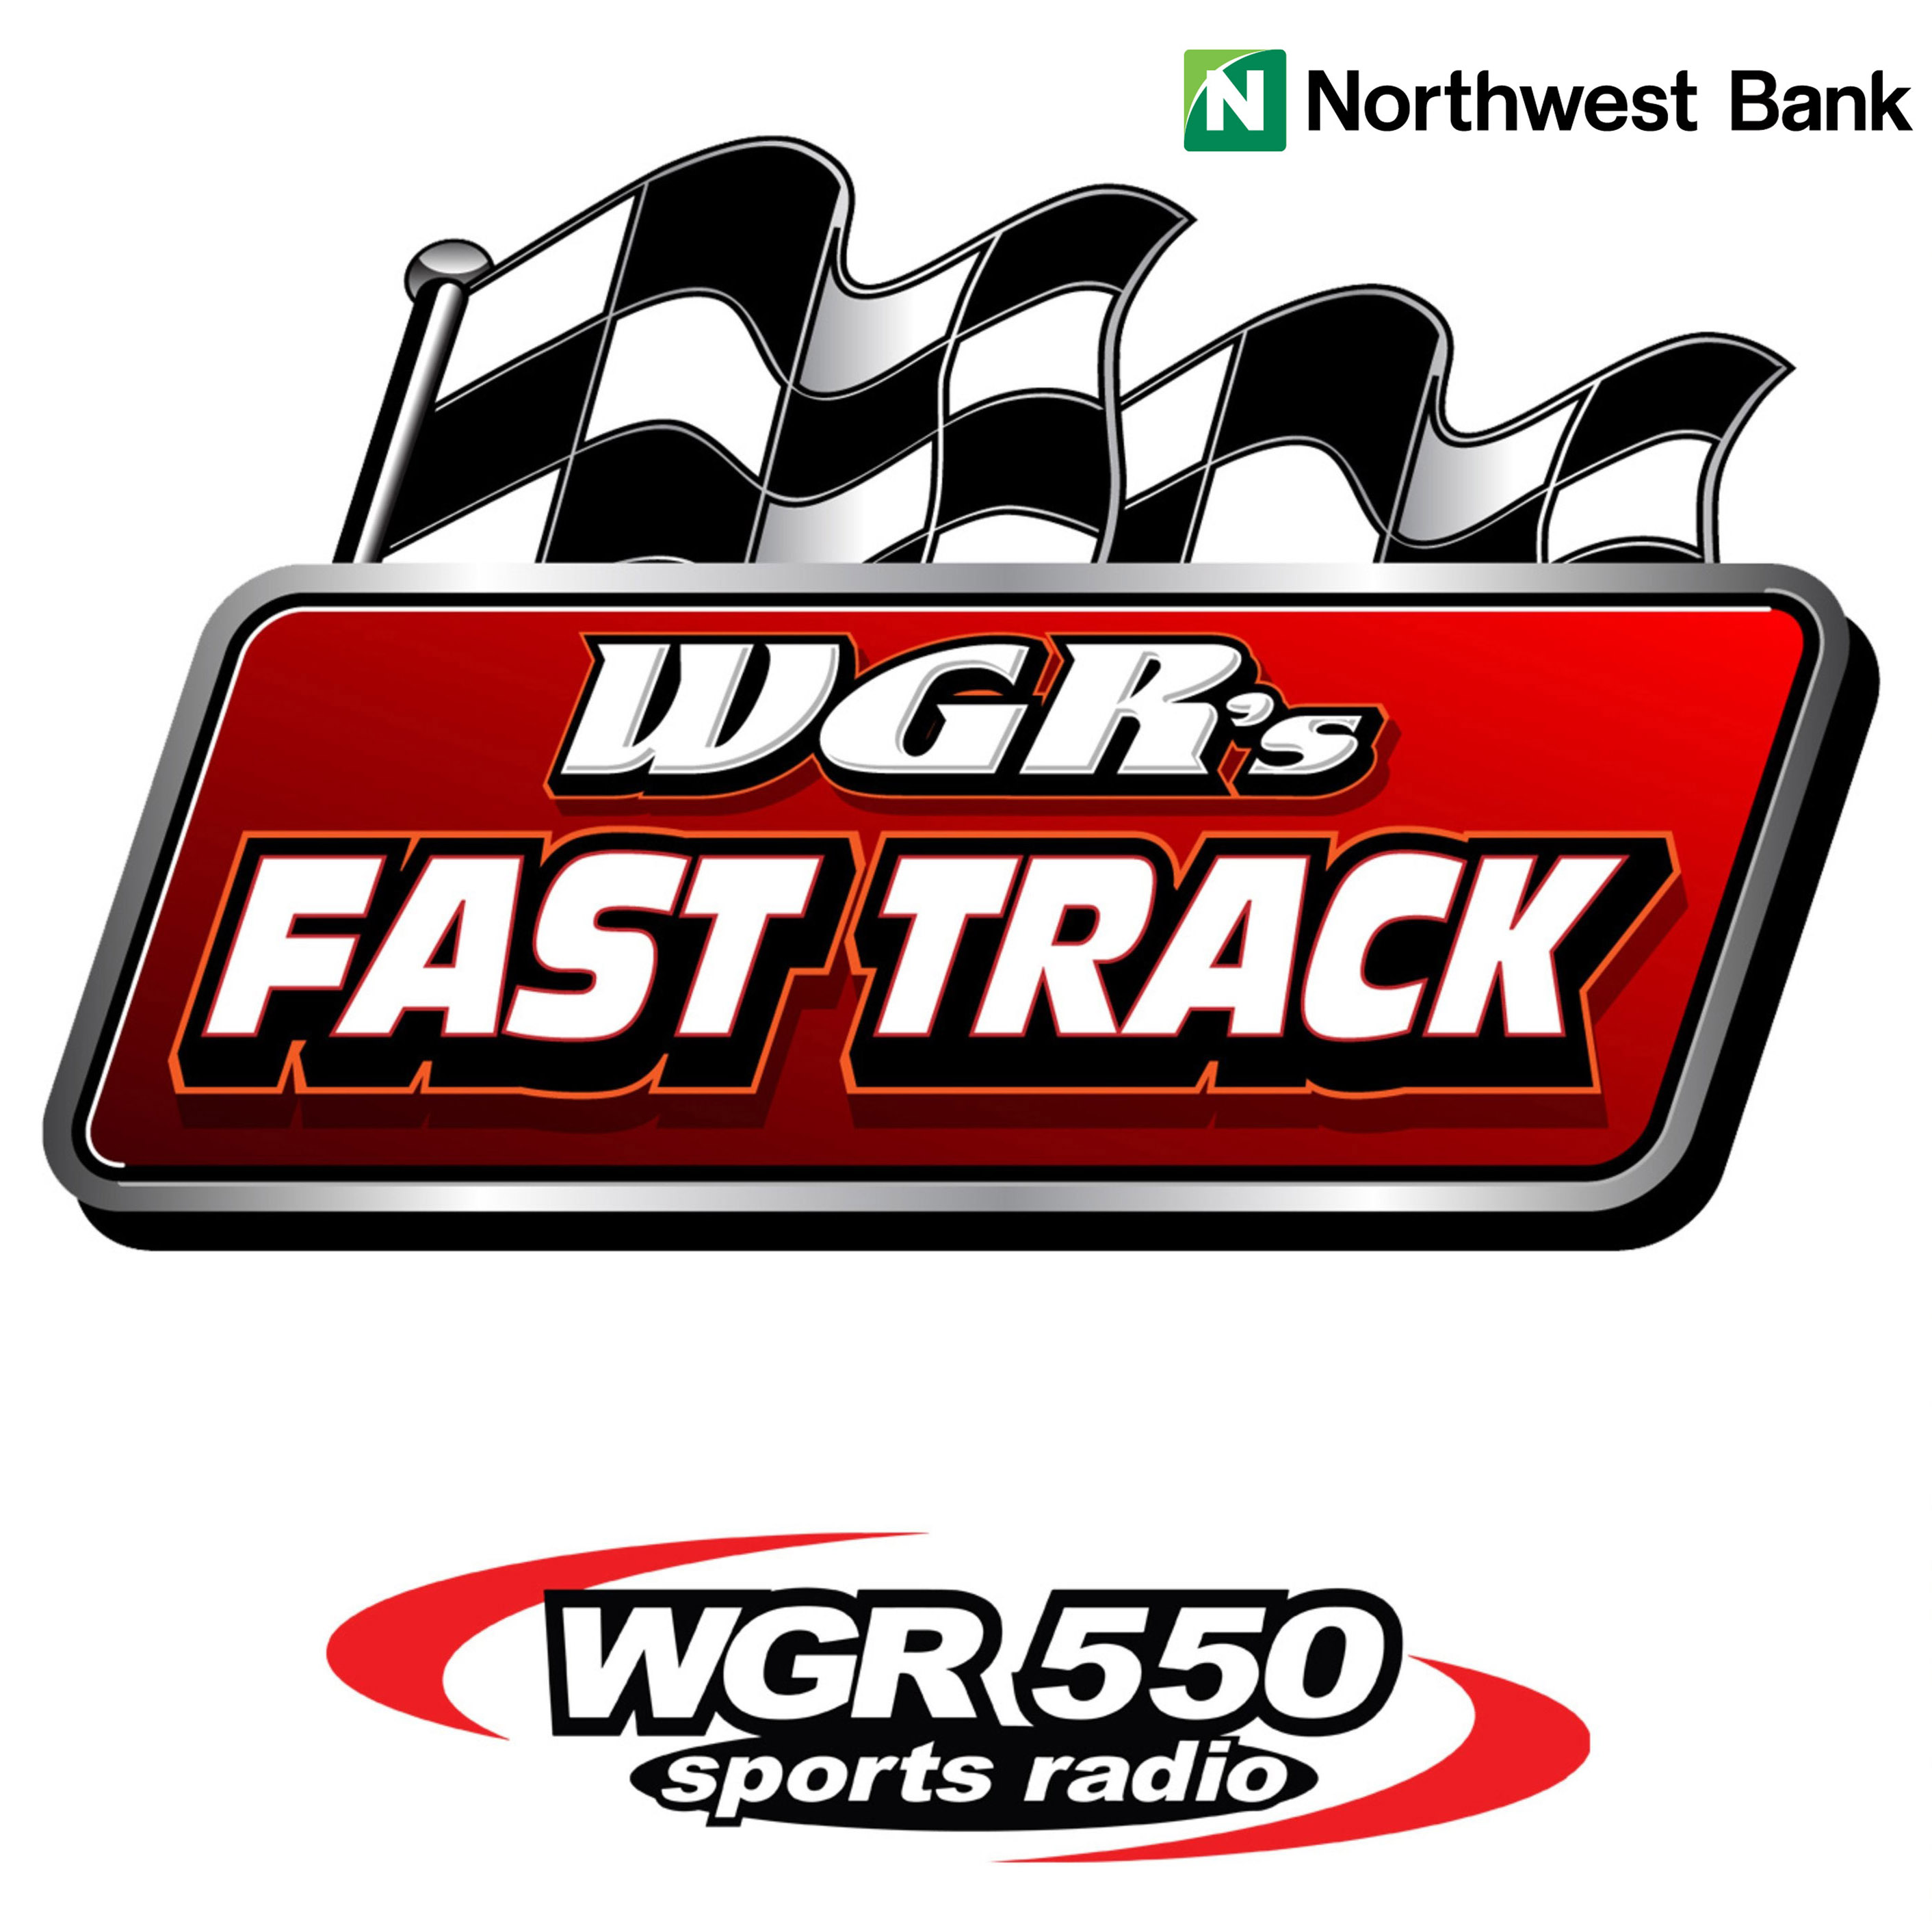 7/7 WGR Fast Track